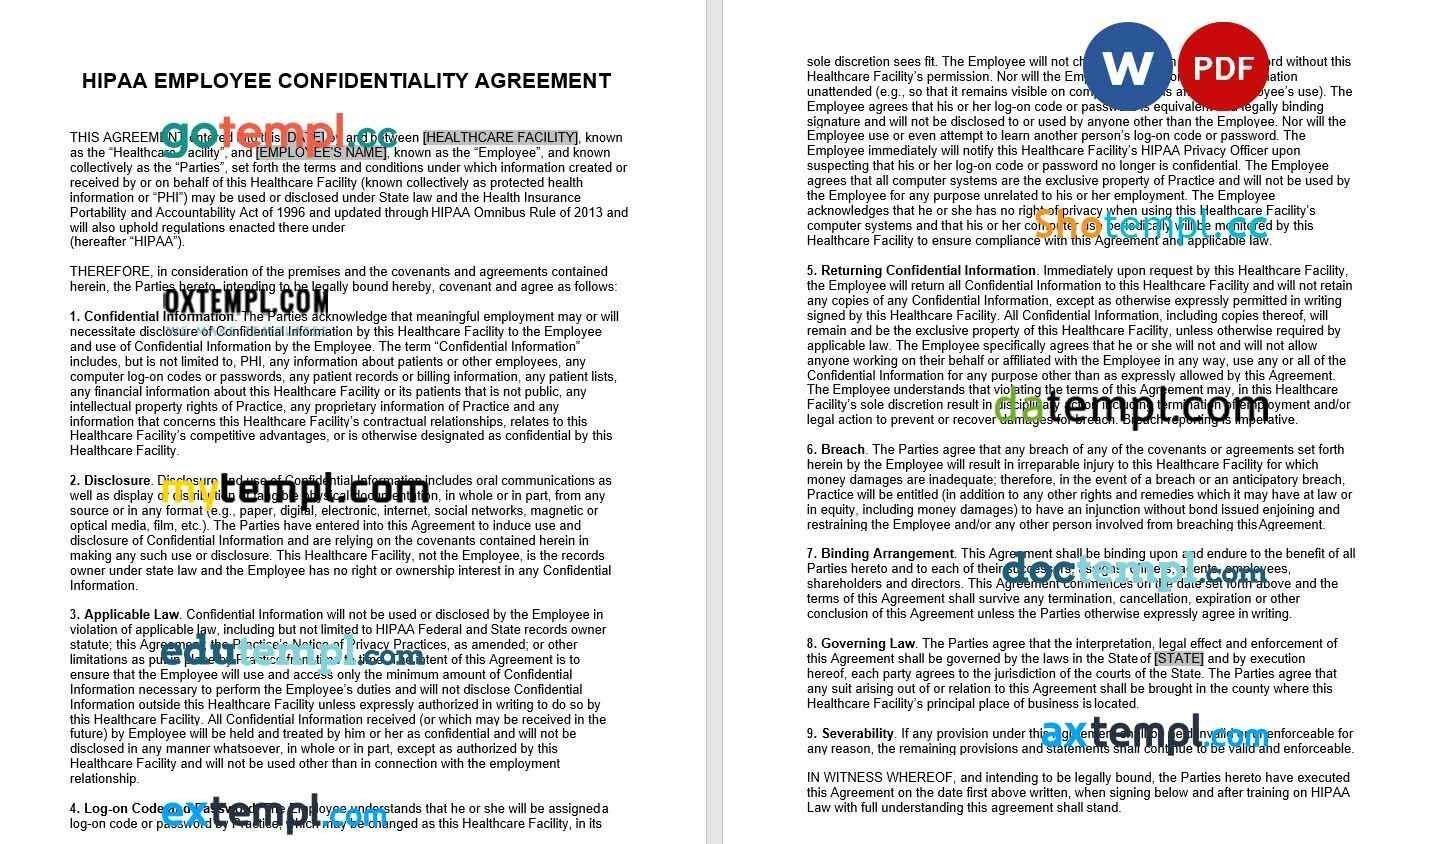 HIPAA Employee Confidentiality Non-Disclosure Agreement NDA Word example